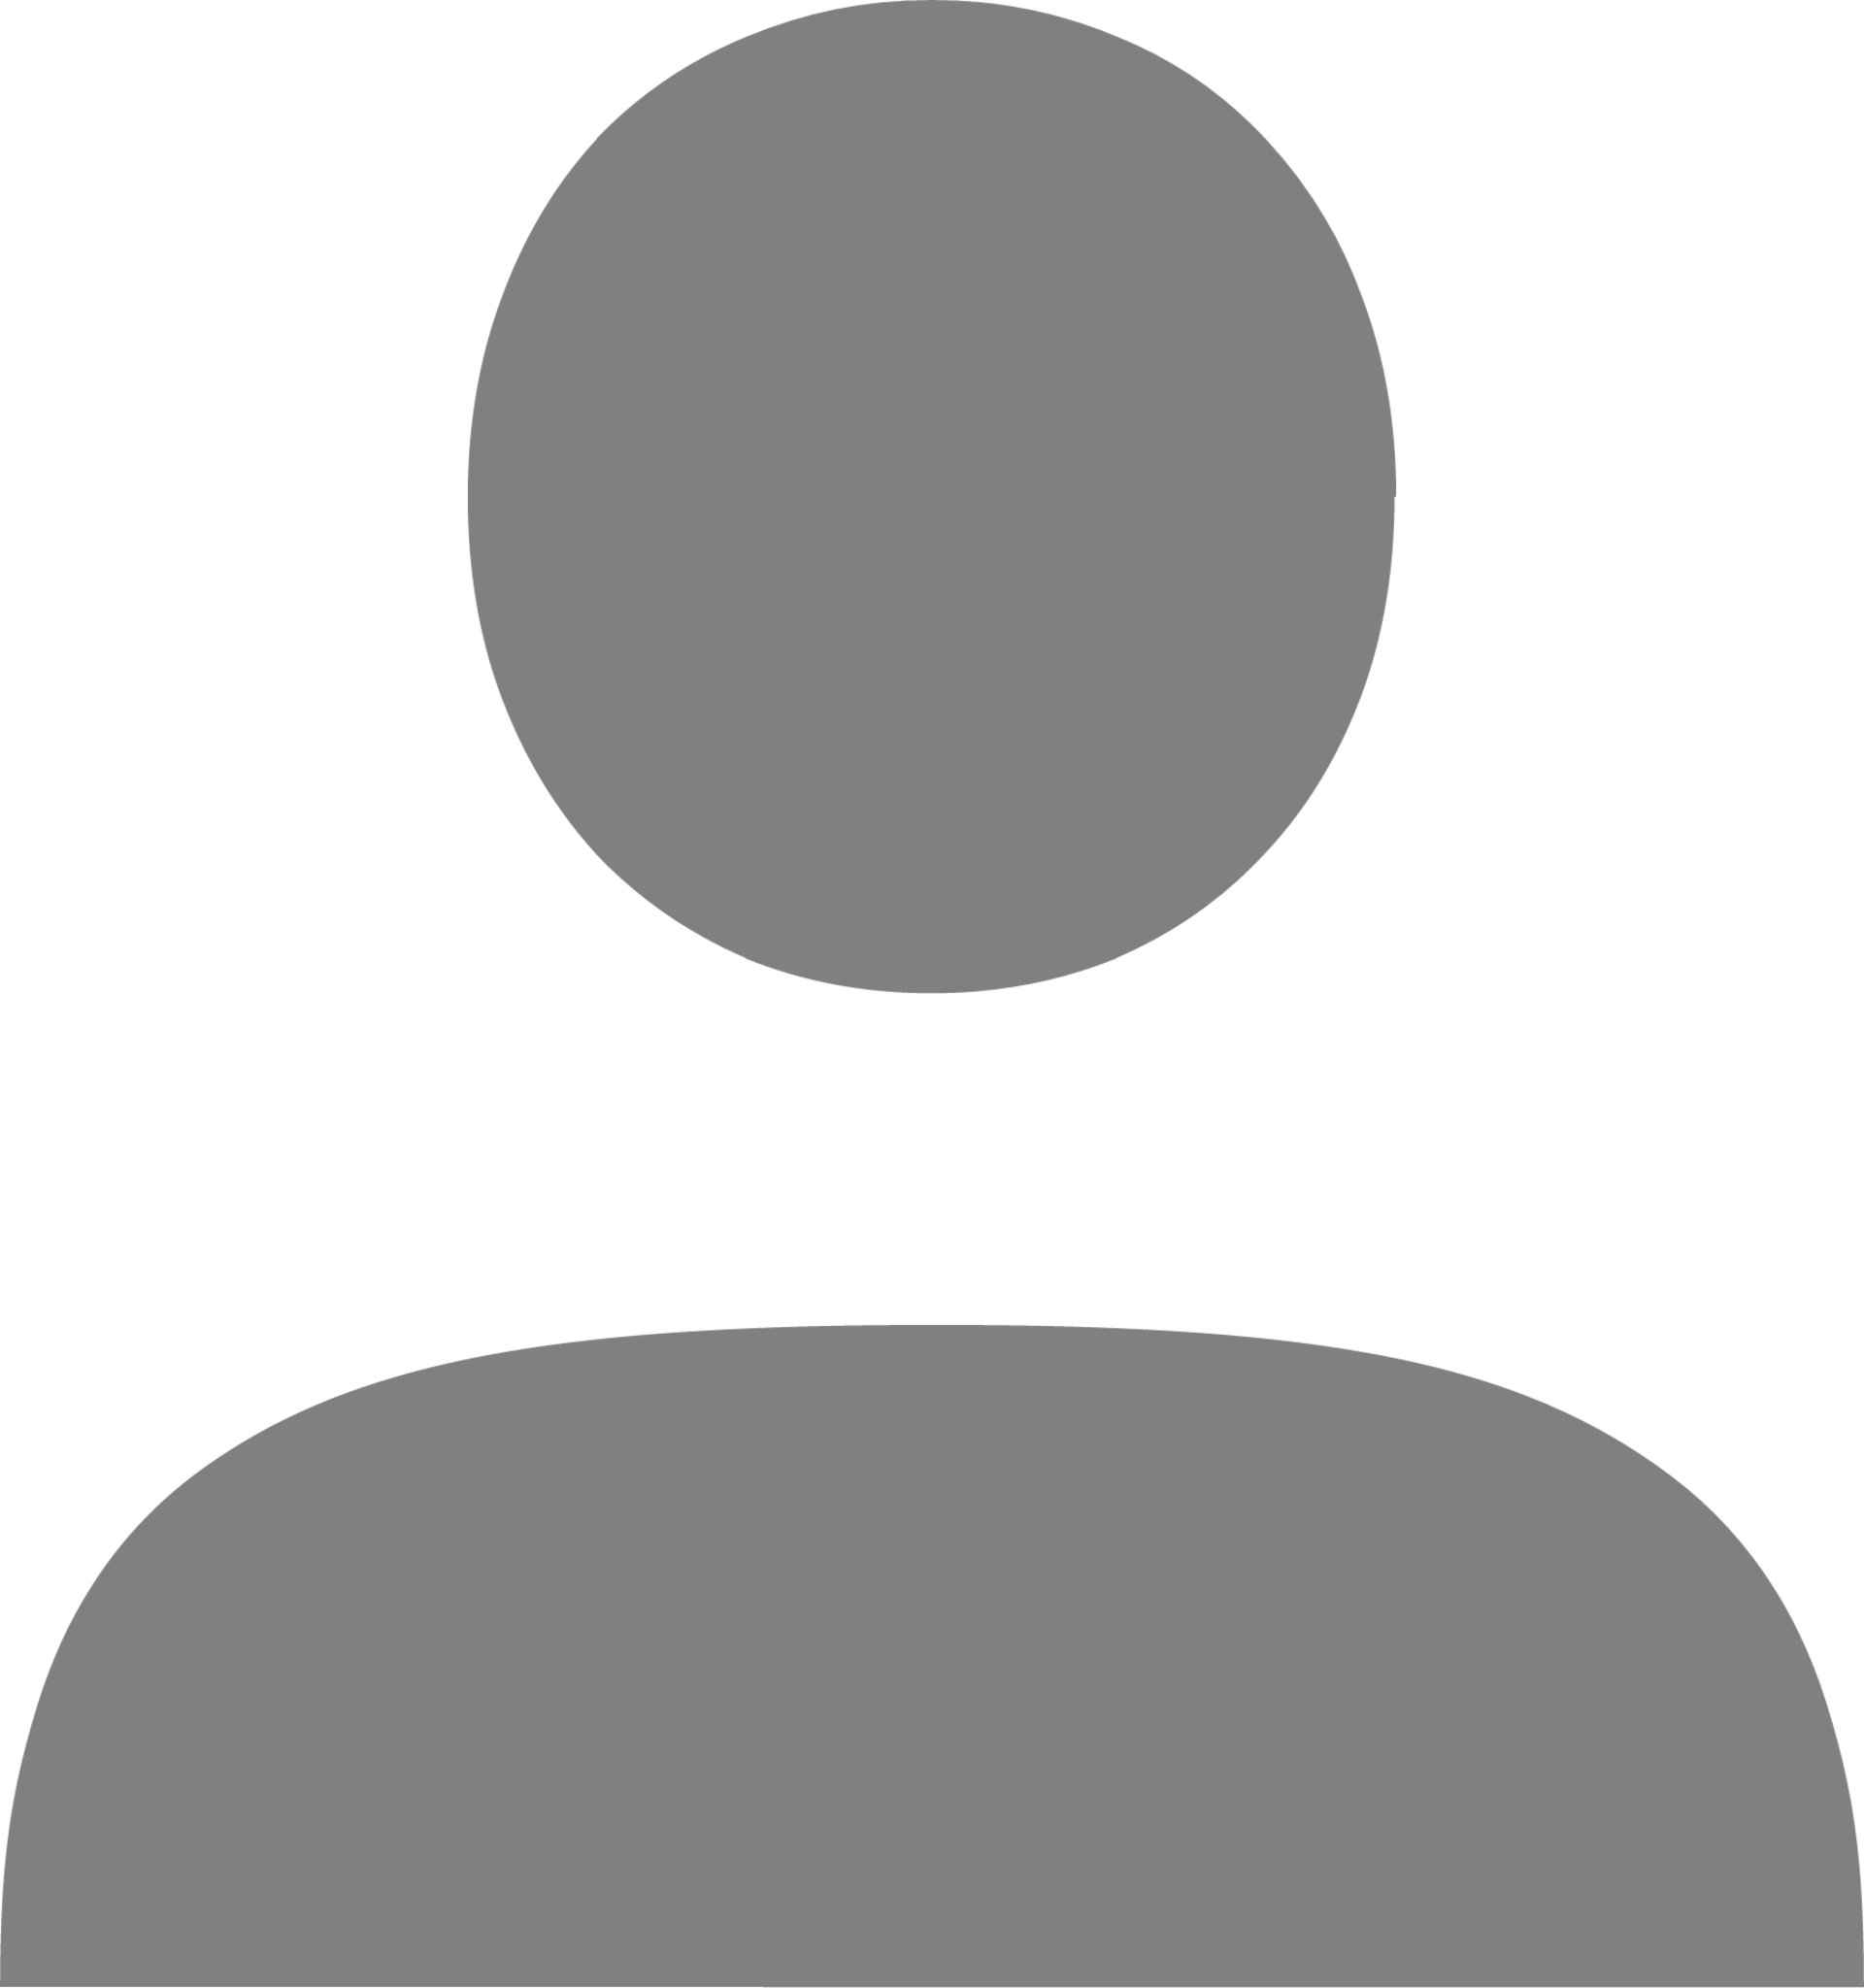 avatar default symbolic icon